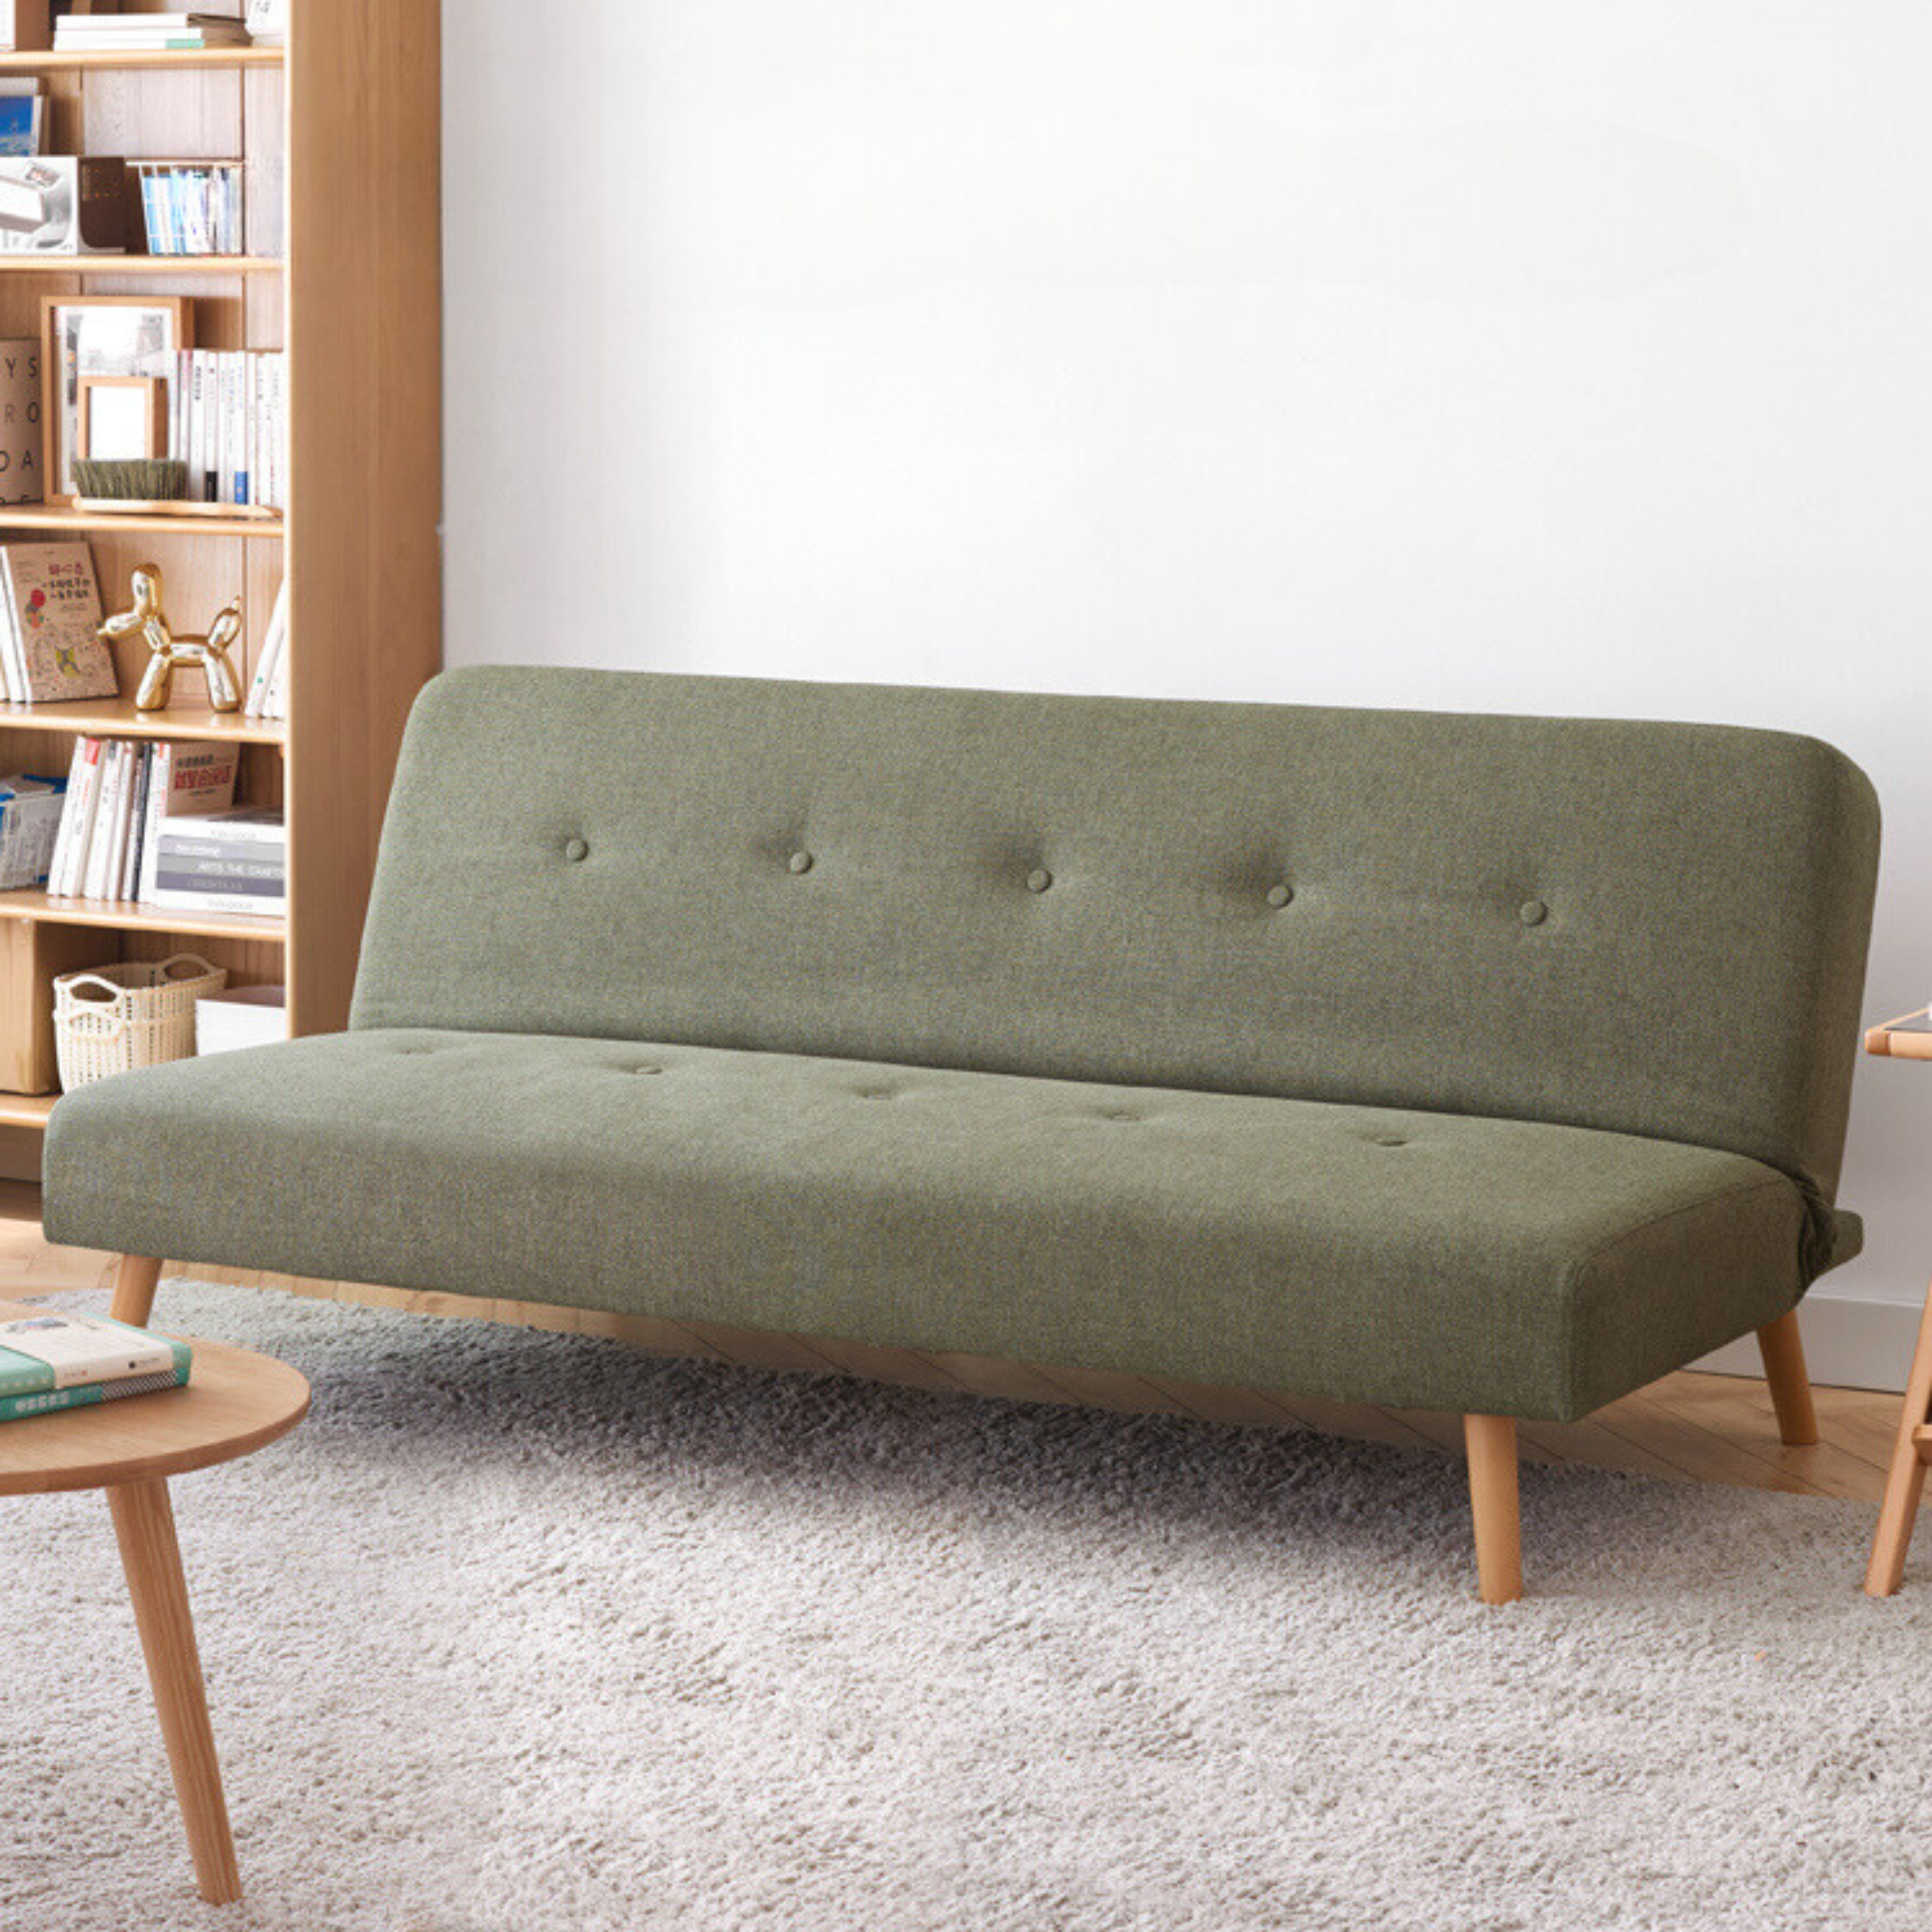 Sleeper sofa modern minimalist